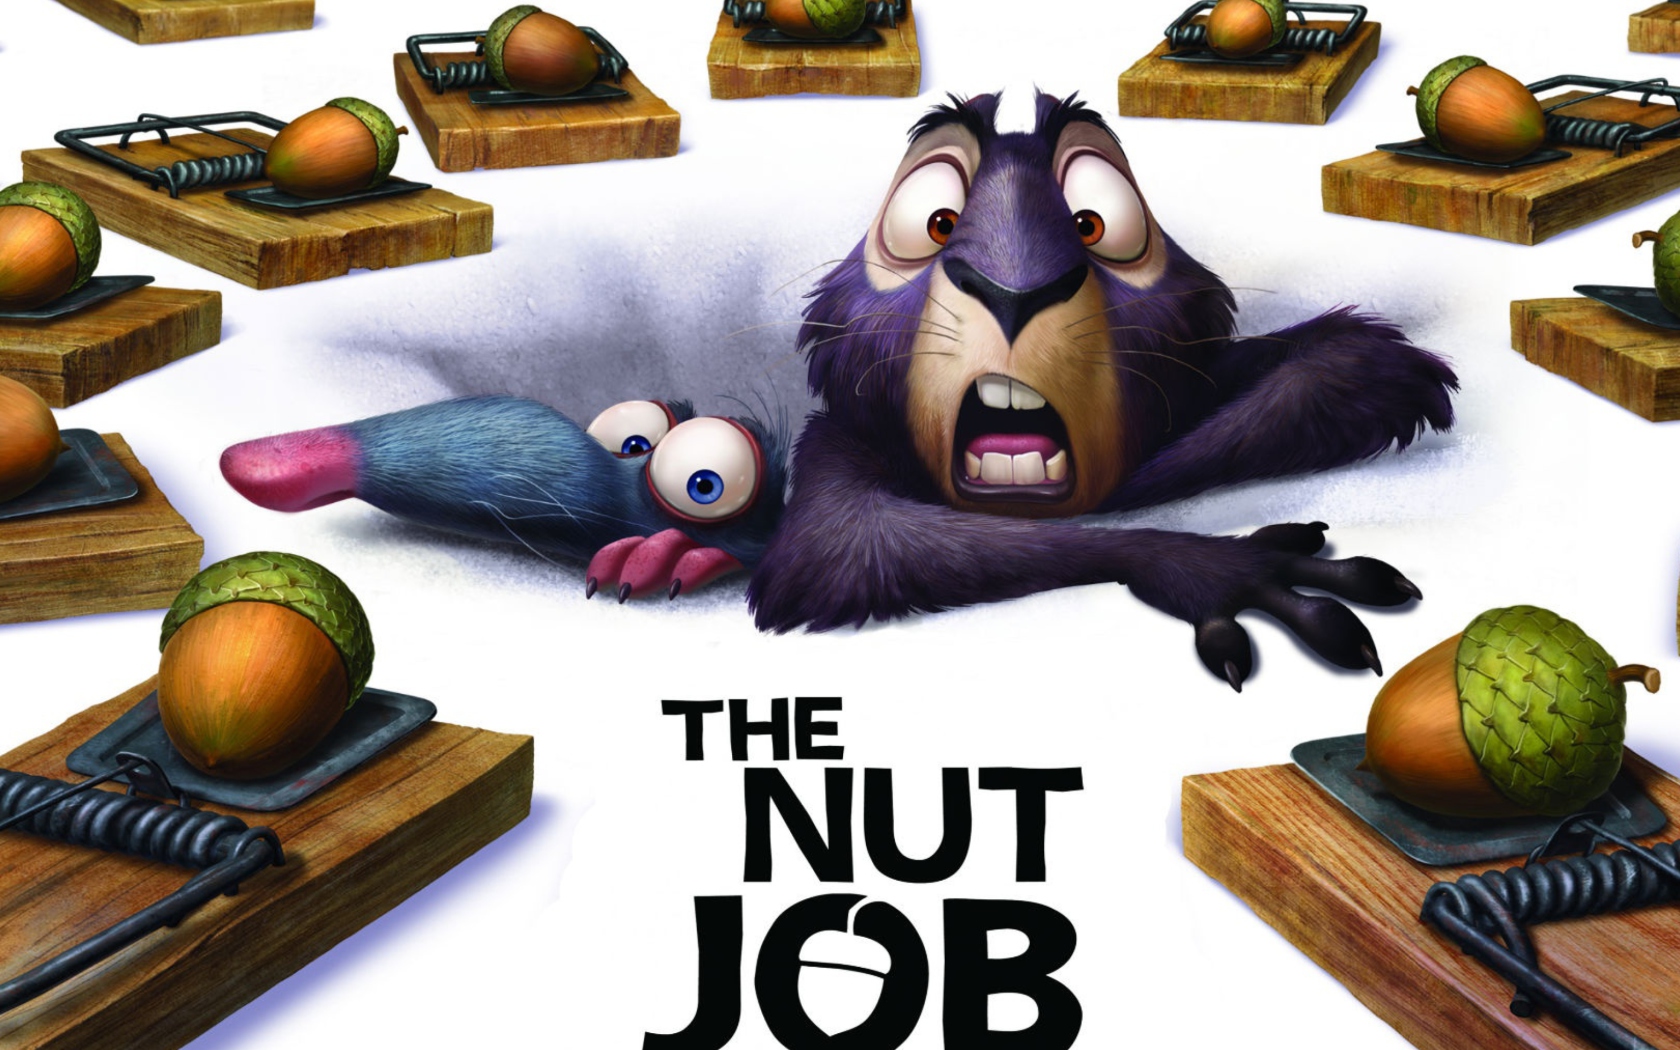 The Nut Job 2014 wallpaper 1680x1050